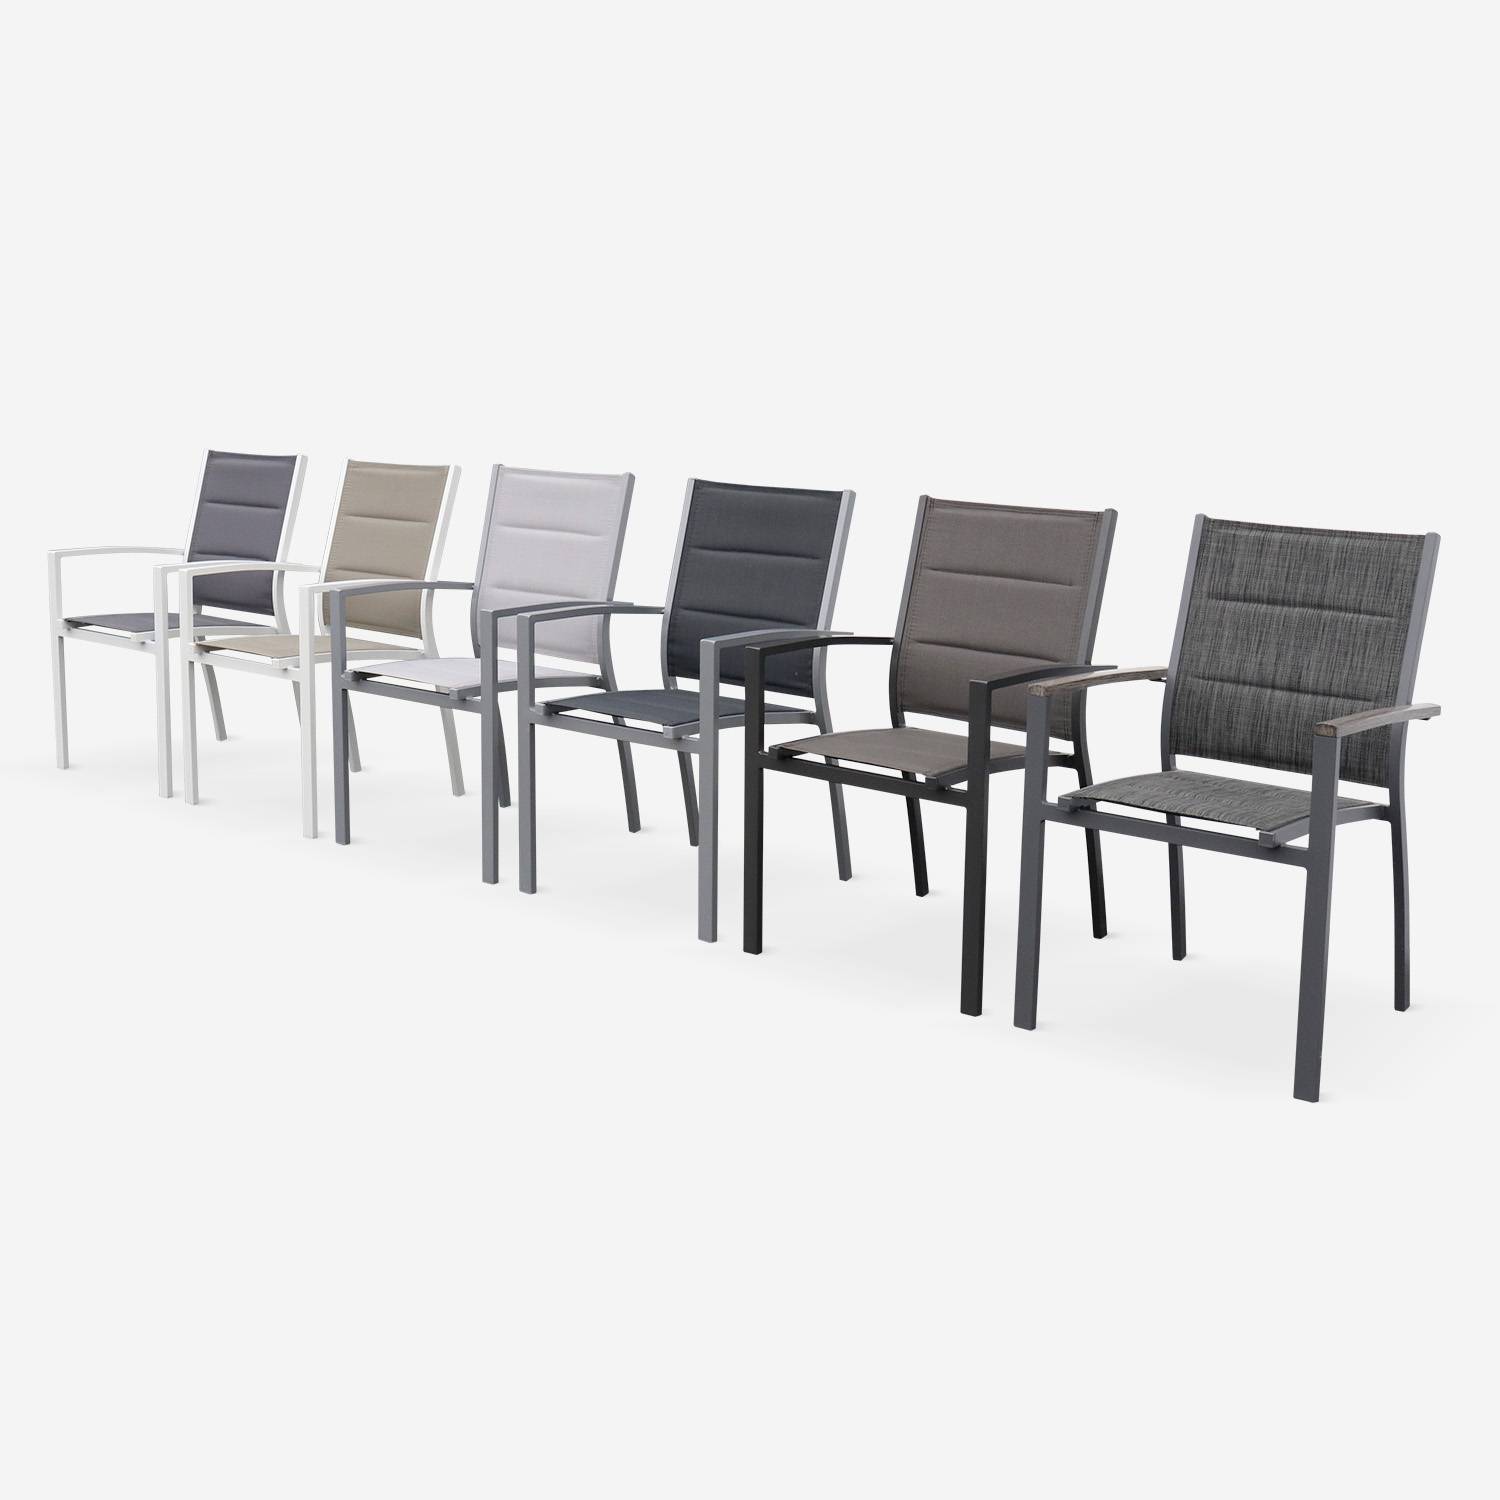 Juego de 2 sillas - Chicago / Odenton / Philadelphia Antracita - aluminio antracita y textileno gris oscuro, apilables Photo6